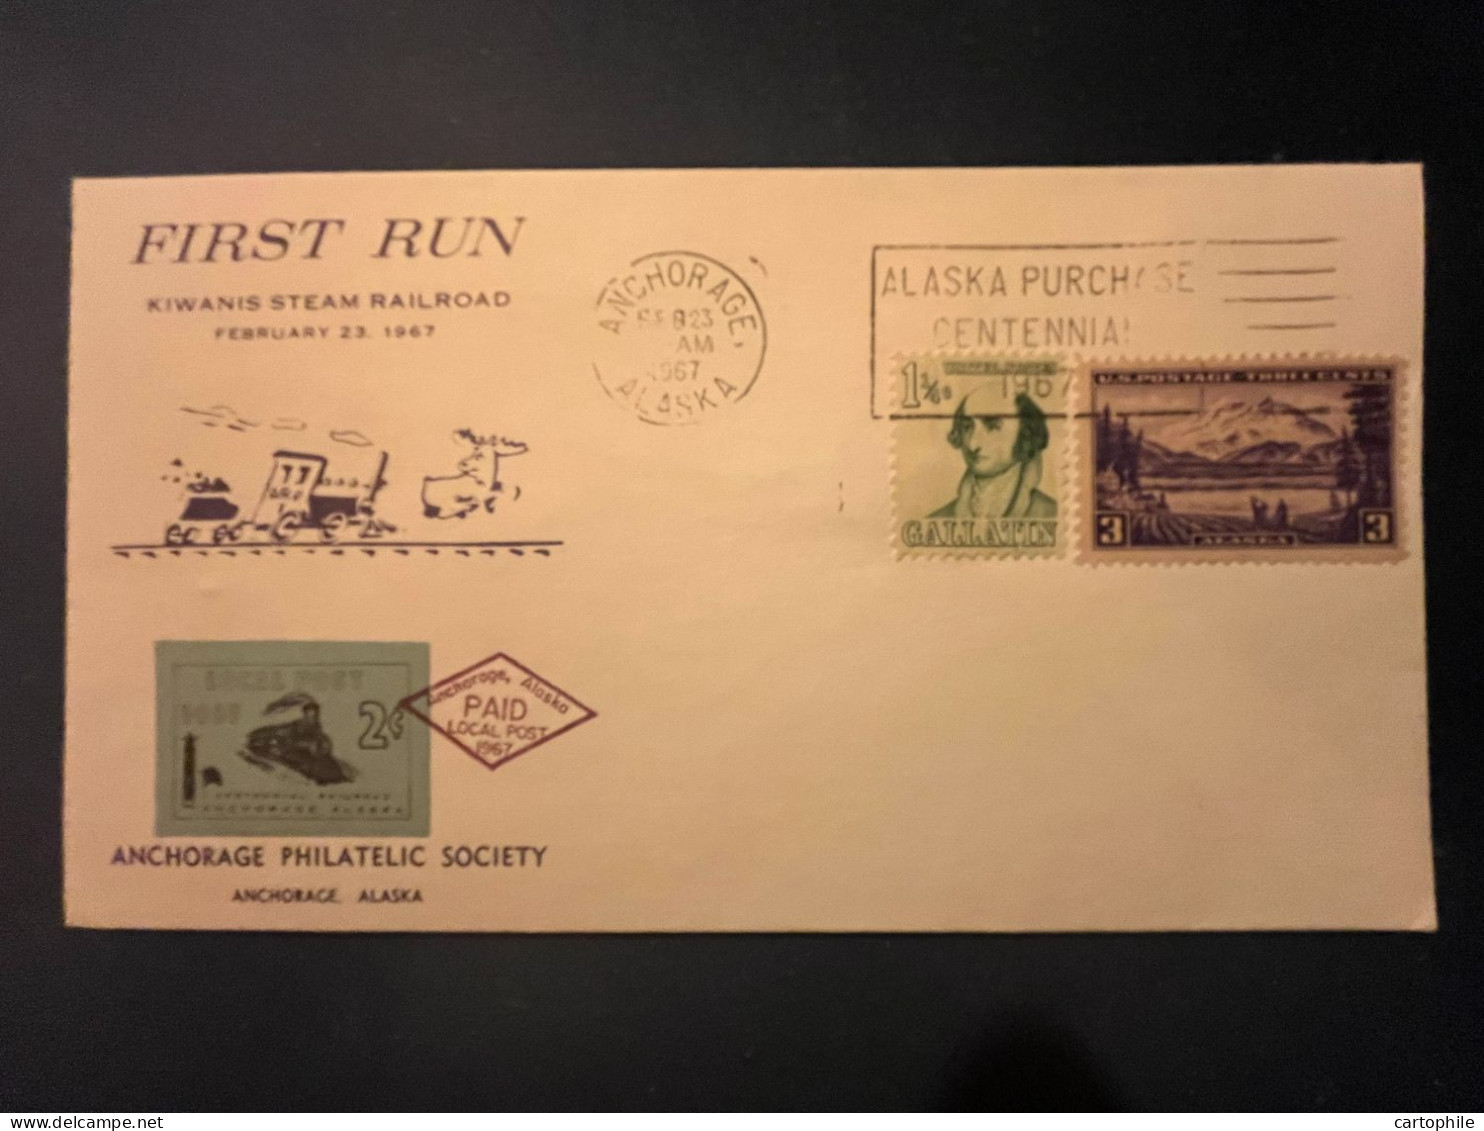 Local Post Anchorage Alaska - First Run Kiwanis Steam Railroad Cover 1967 - Timbre Local 2c Centennial Railroad - Covers & Documents